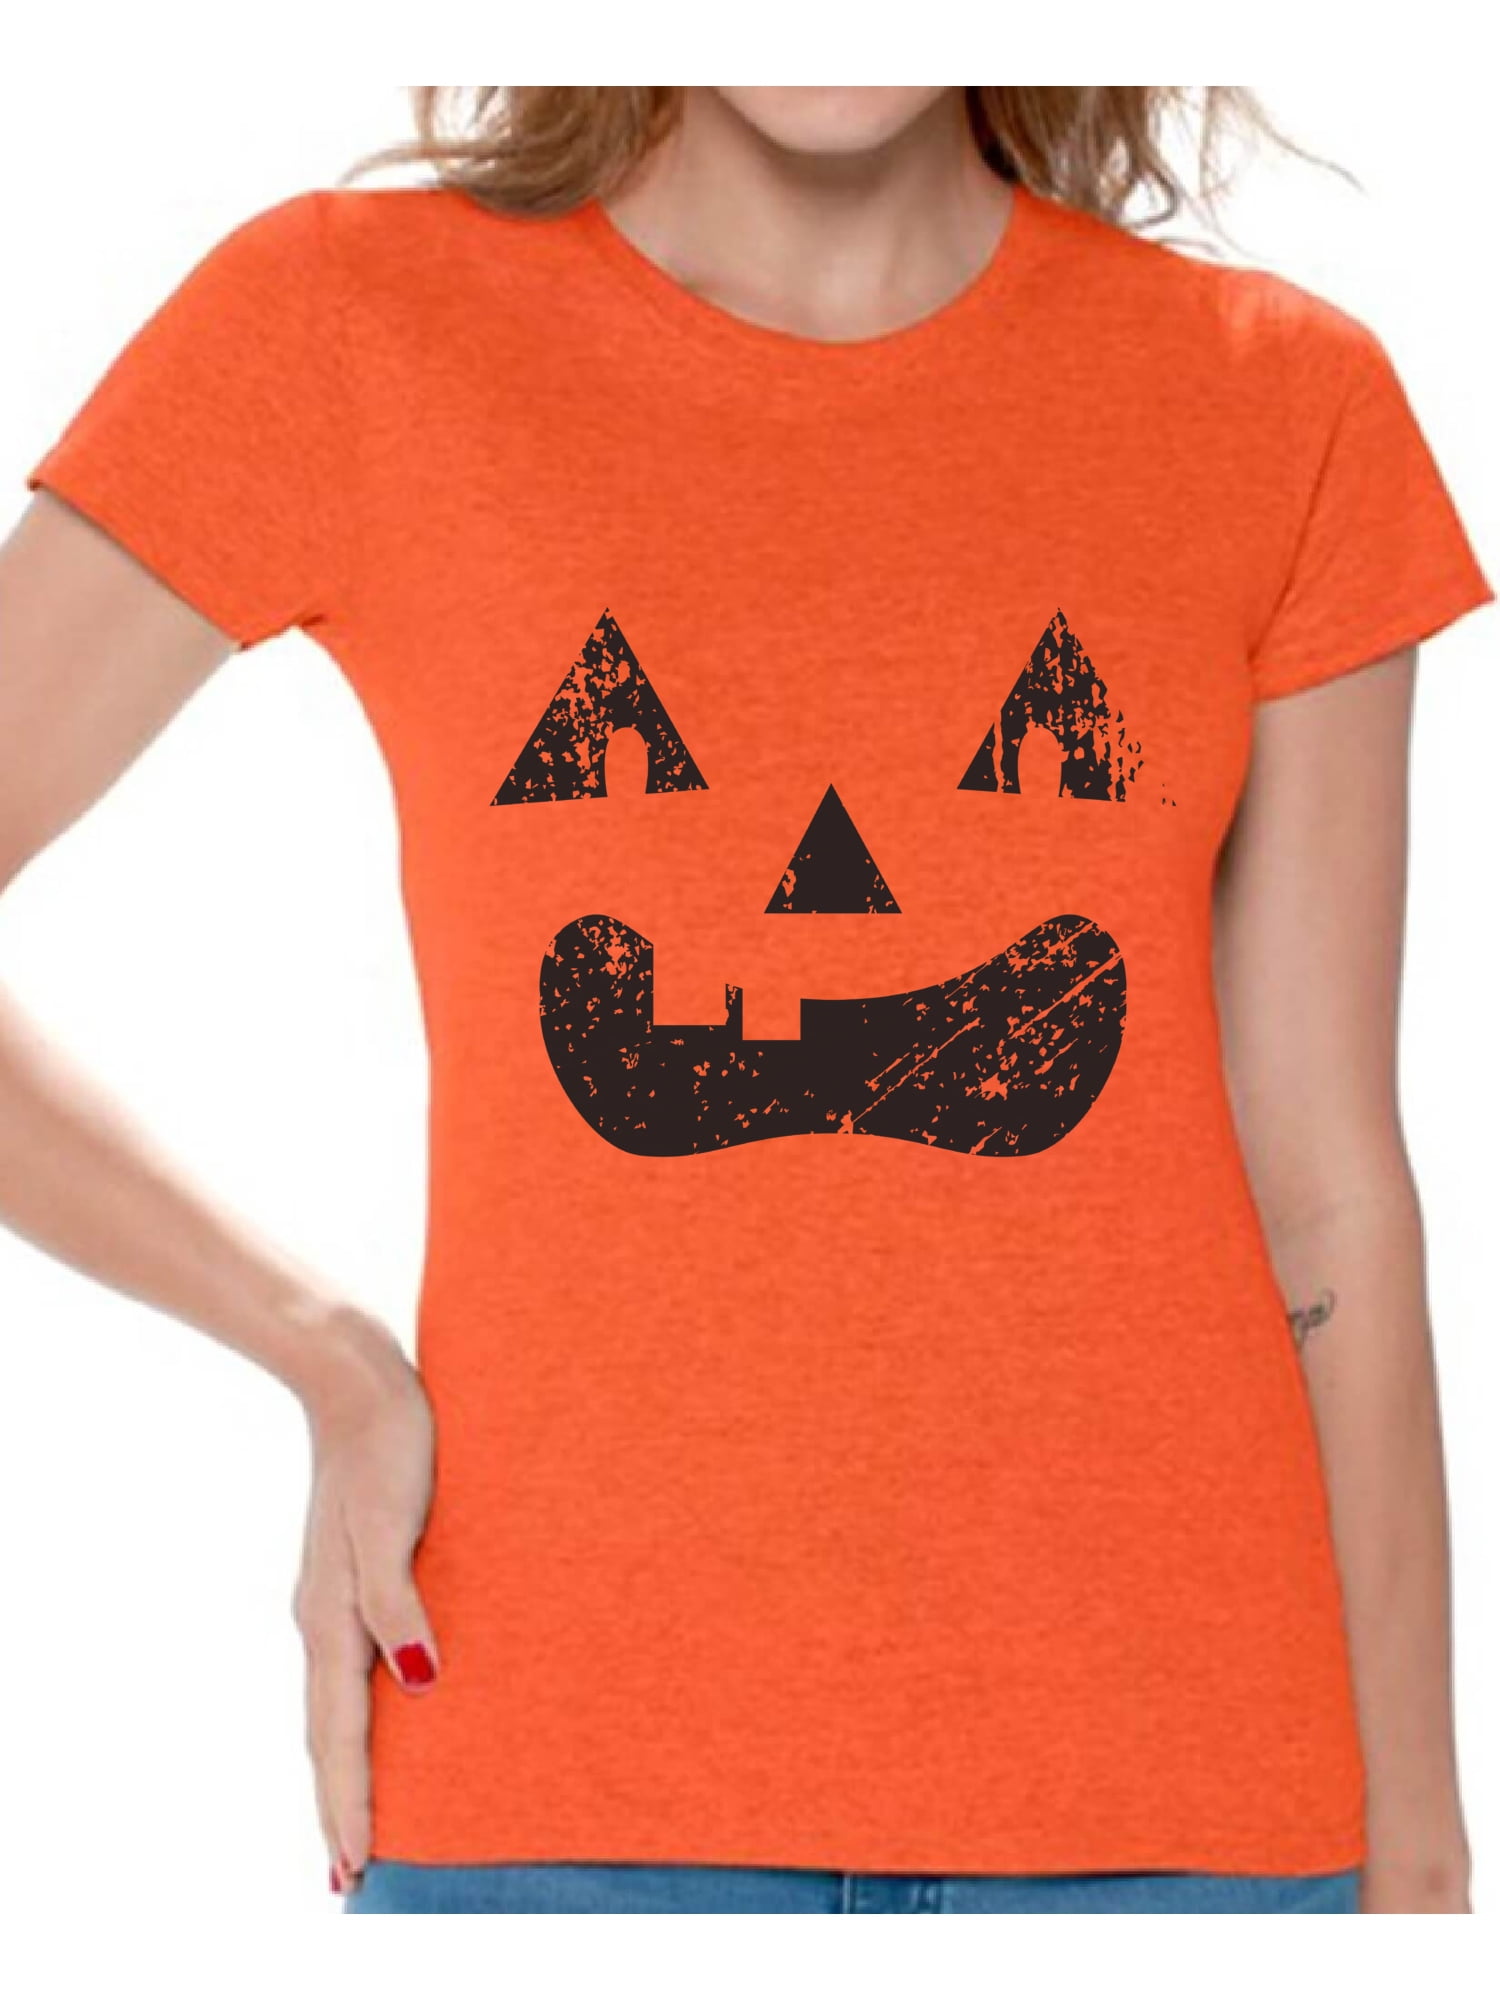 Trick or Treat Clothing Gender-Neutral Adult Clothing Tops & Tees T-shirts Pumpkin Season Shirt Halloween Gift Halloween Shirt Happy Halloween Shirt Spooky Season Shirt 